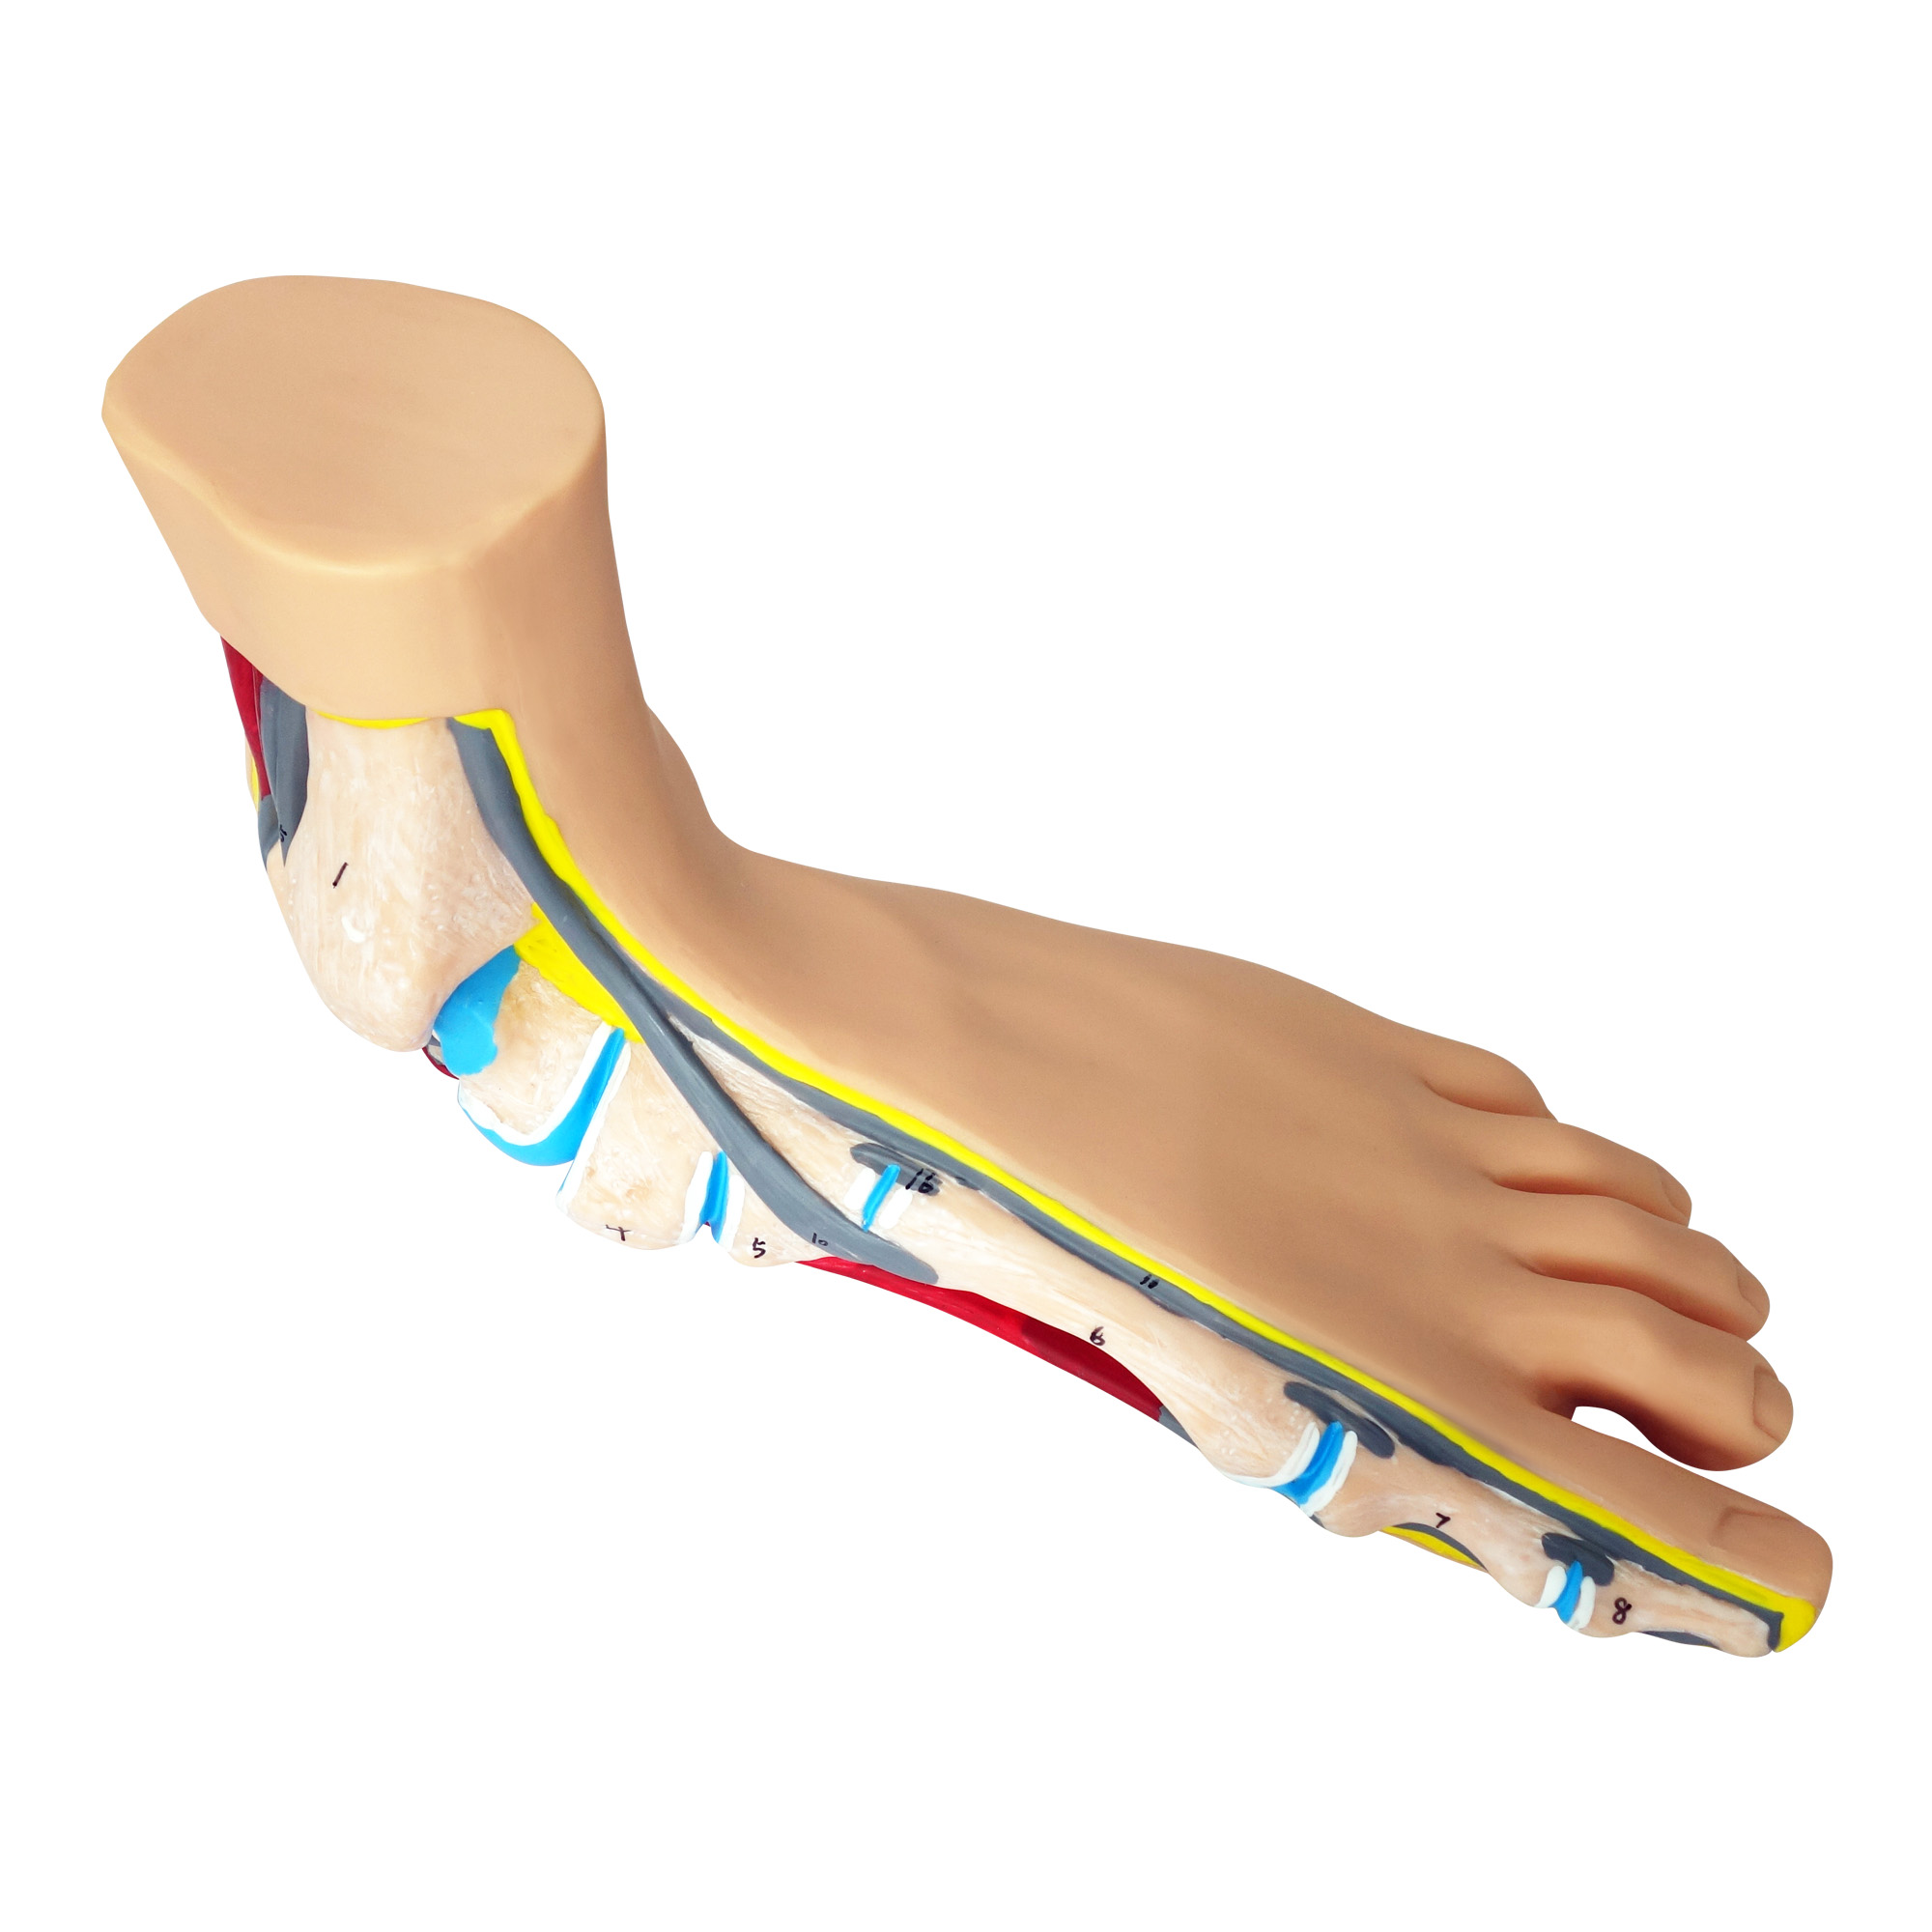 Anatomical flat foot model 1 pc